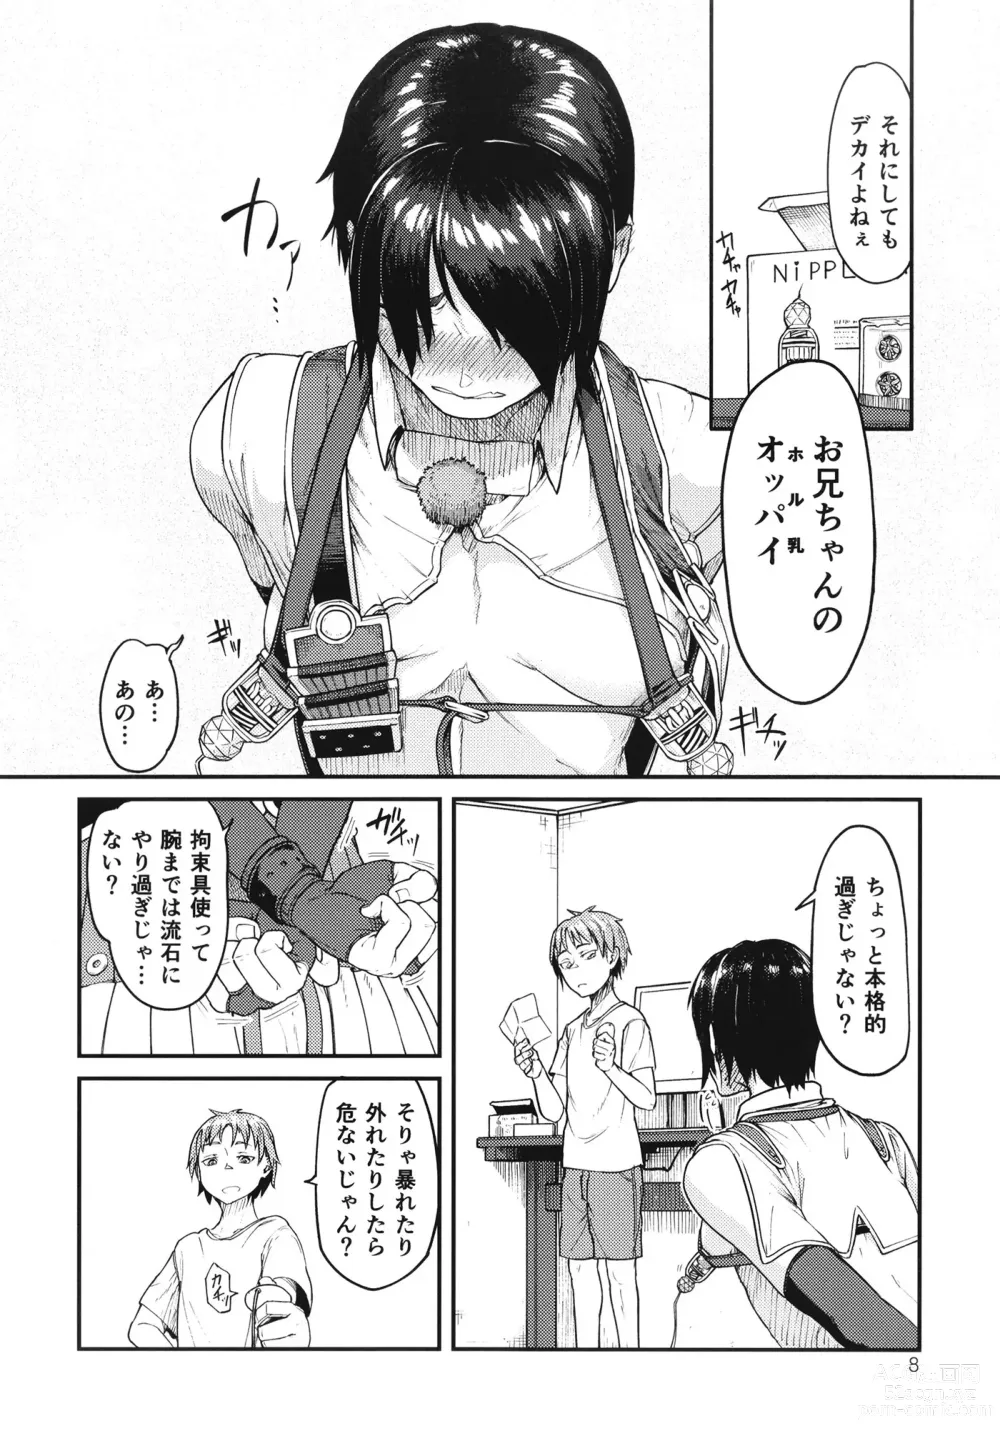 Page 8 of doujinshi MHD-01